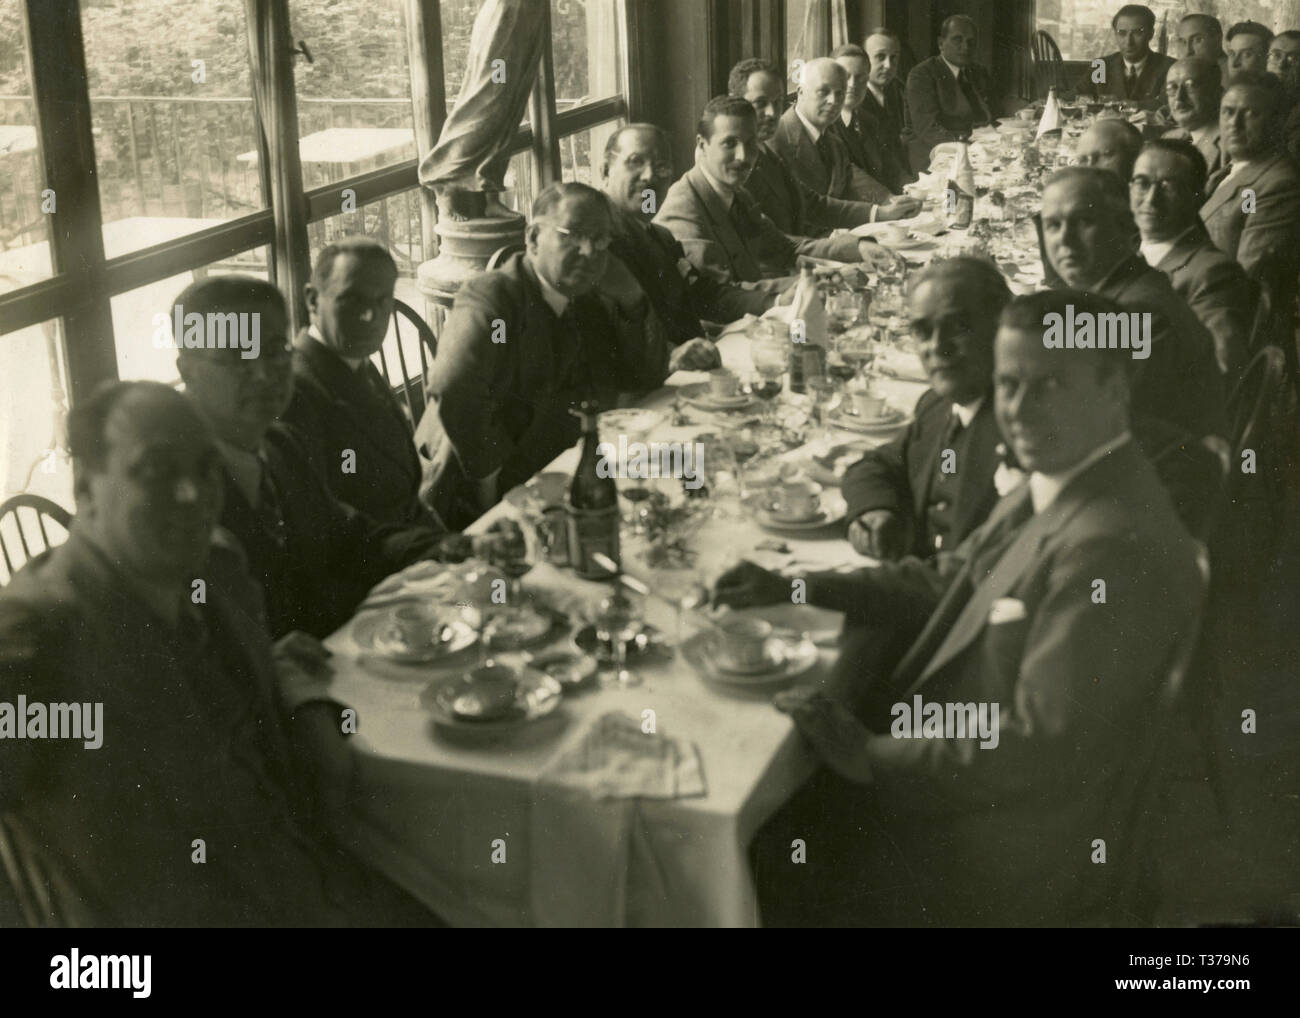 Almuerzo para el oficinista de Filippi fábrica de ladrillos, Castelnuovo di Magra, Italia 1950 Foto de stock